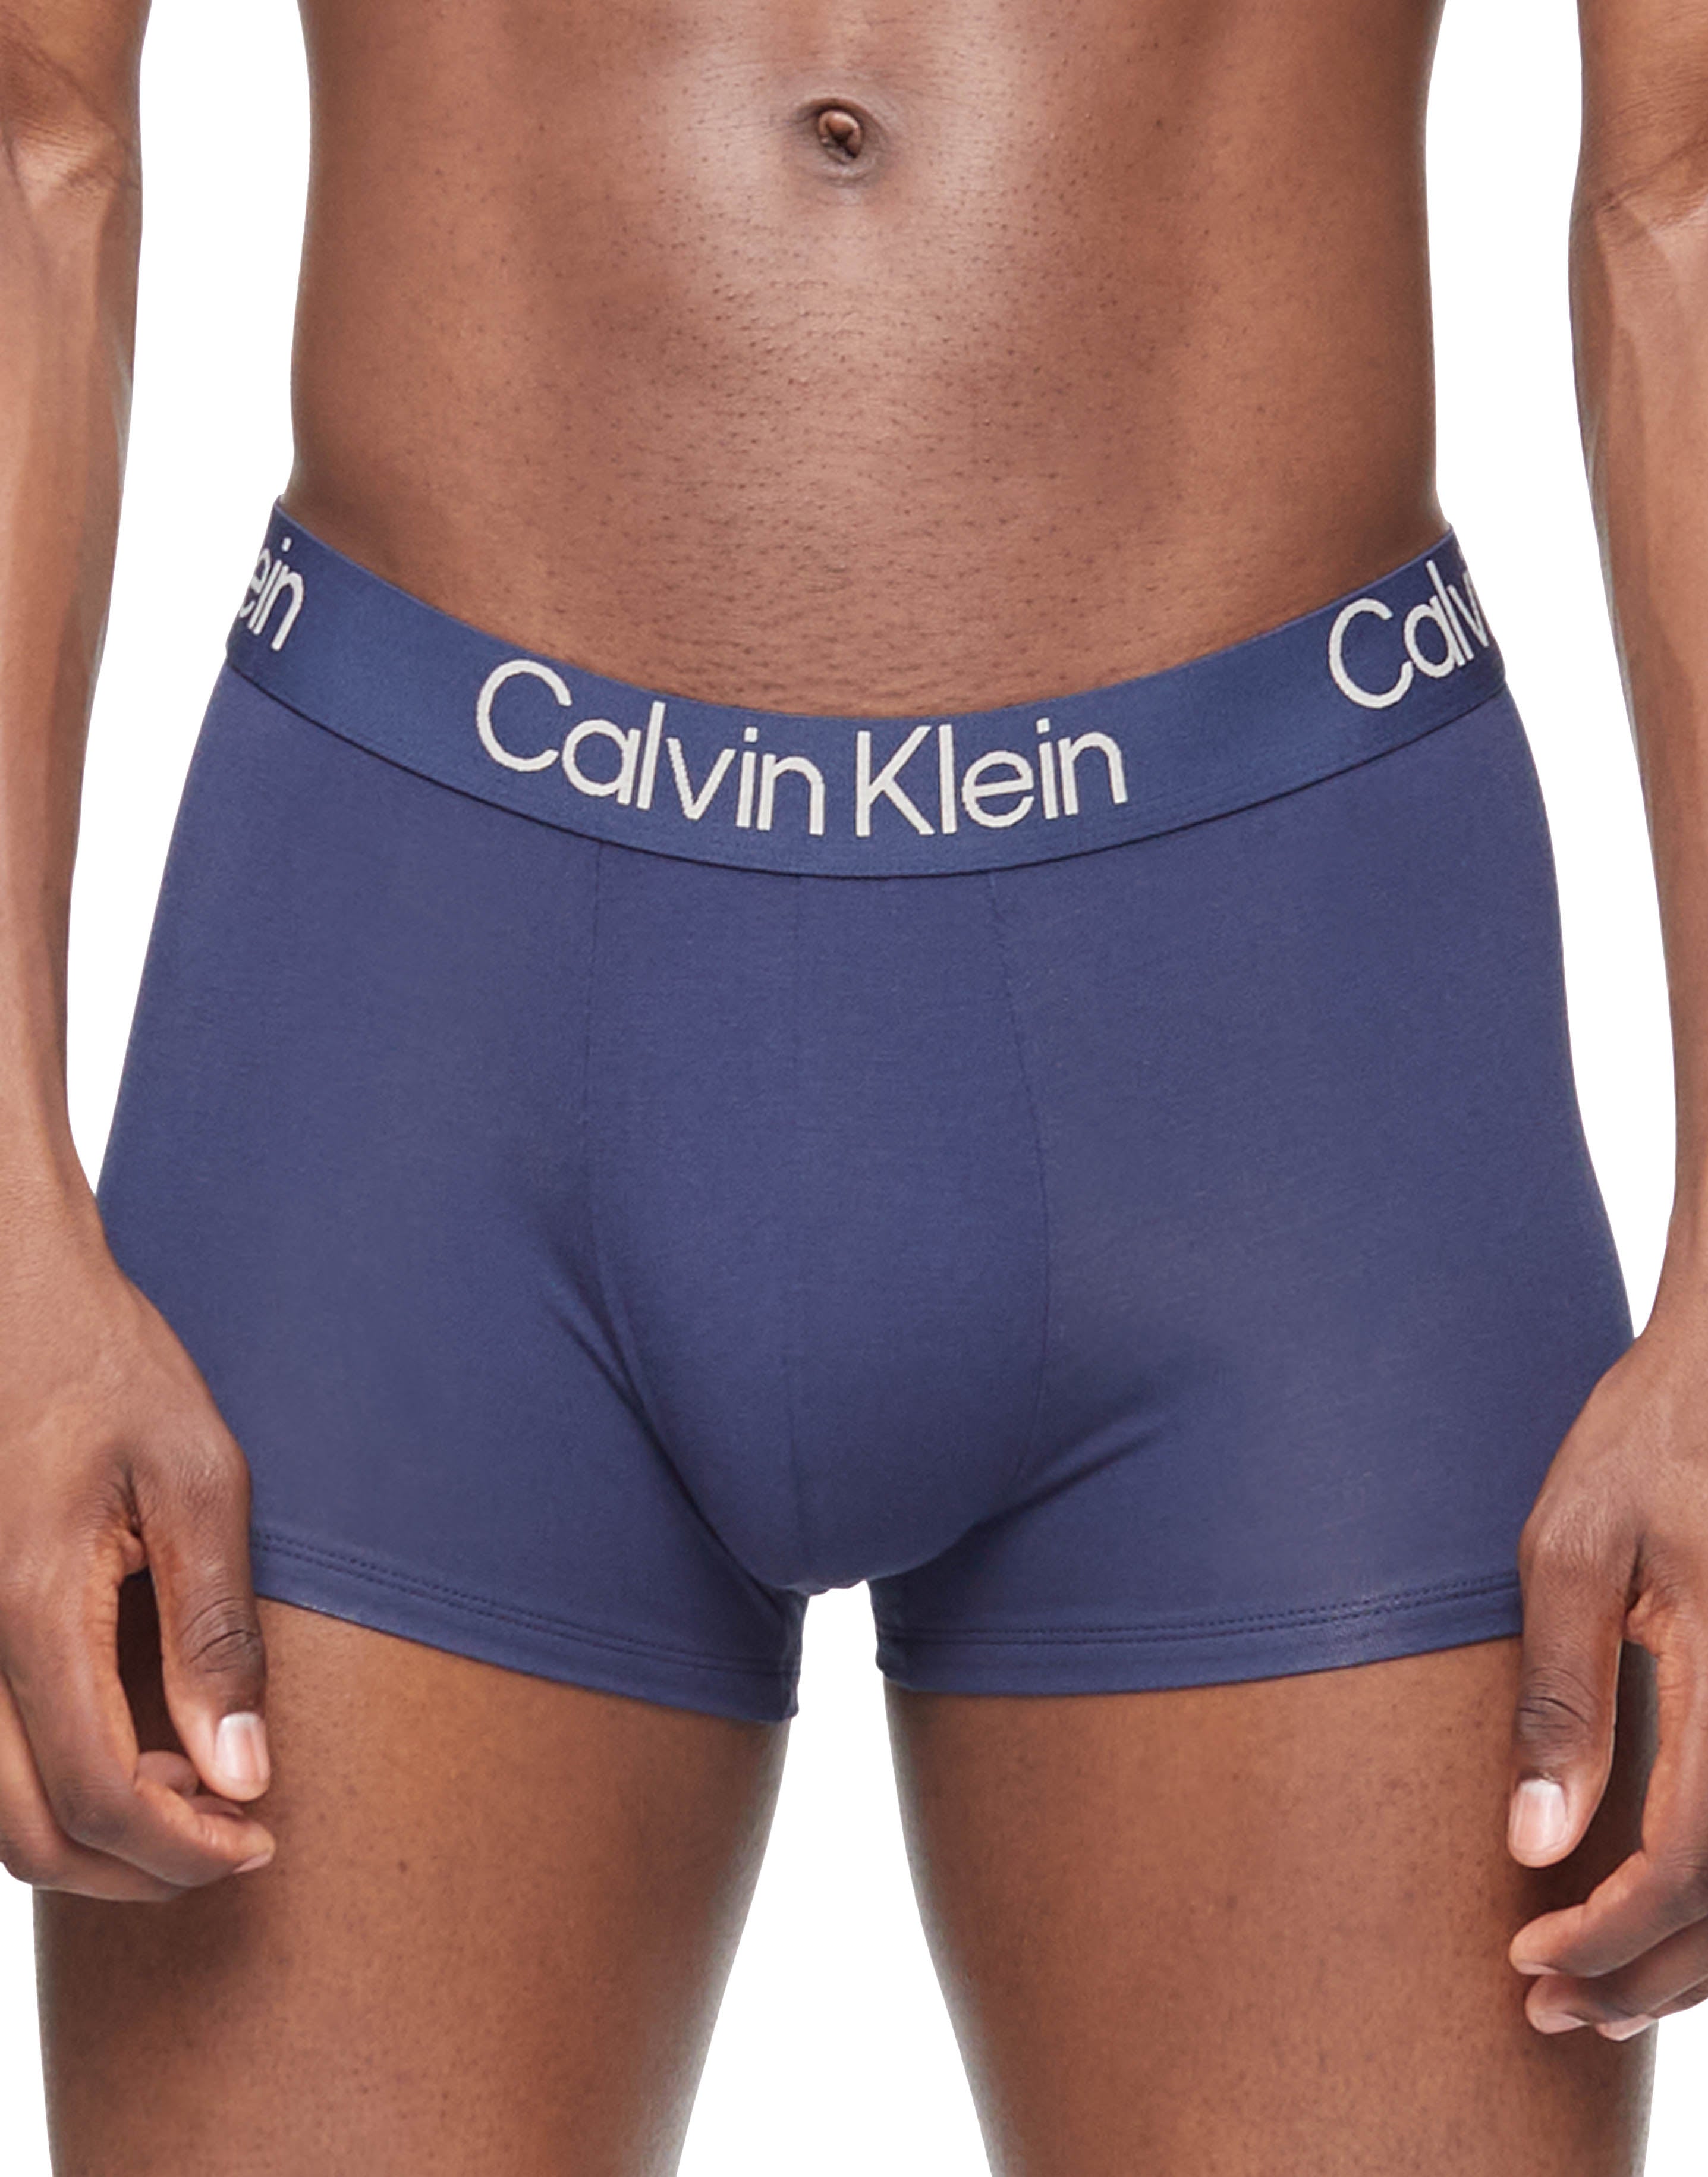 Buy DISPENSER Men's Micro Modal Underwear Trunk/Boxer Shorts